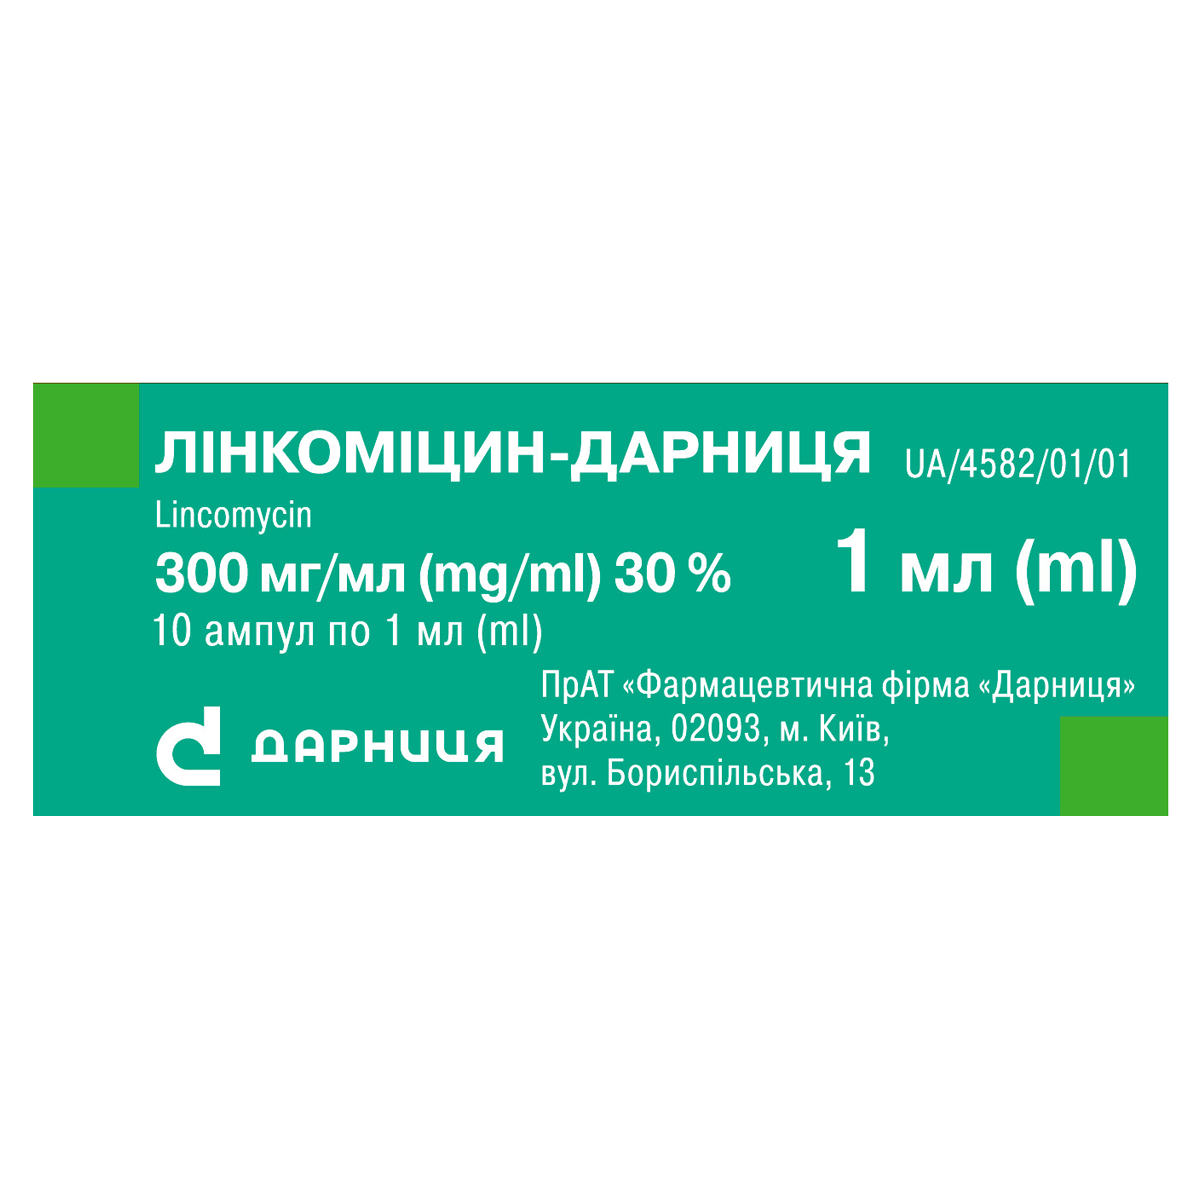 Lincomycin-Darnitsa «Darnytsia» pharmaceutical company